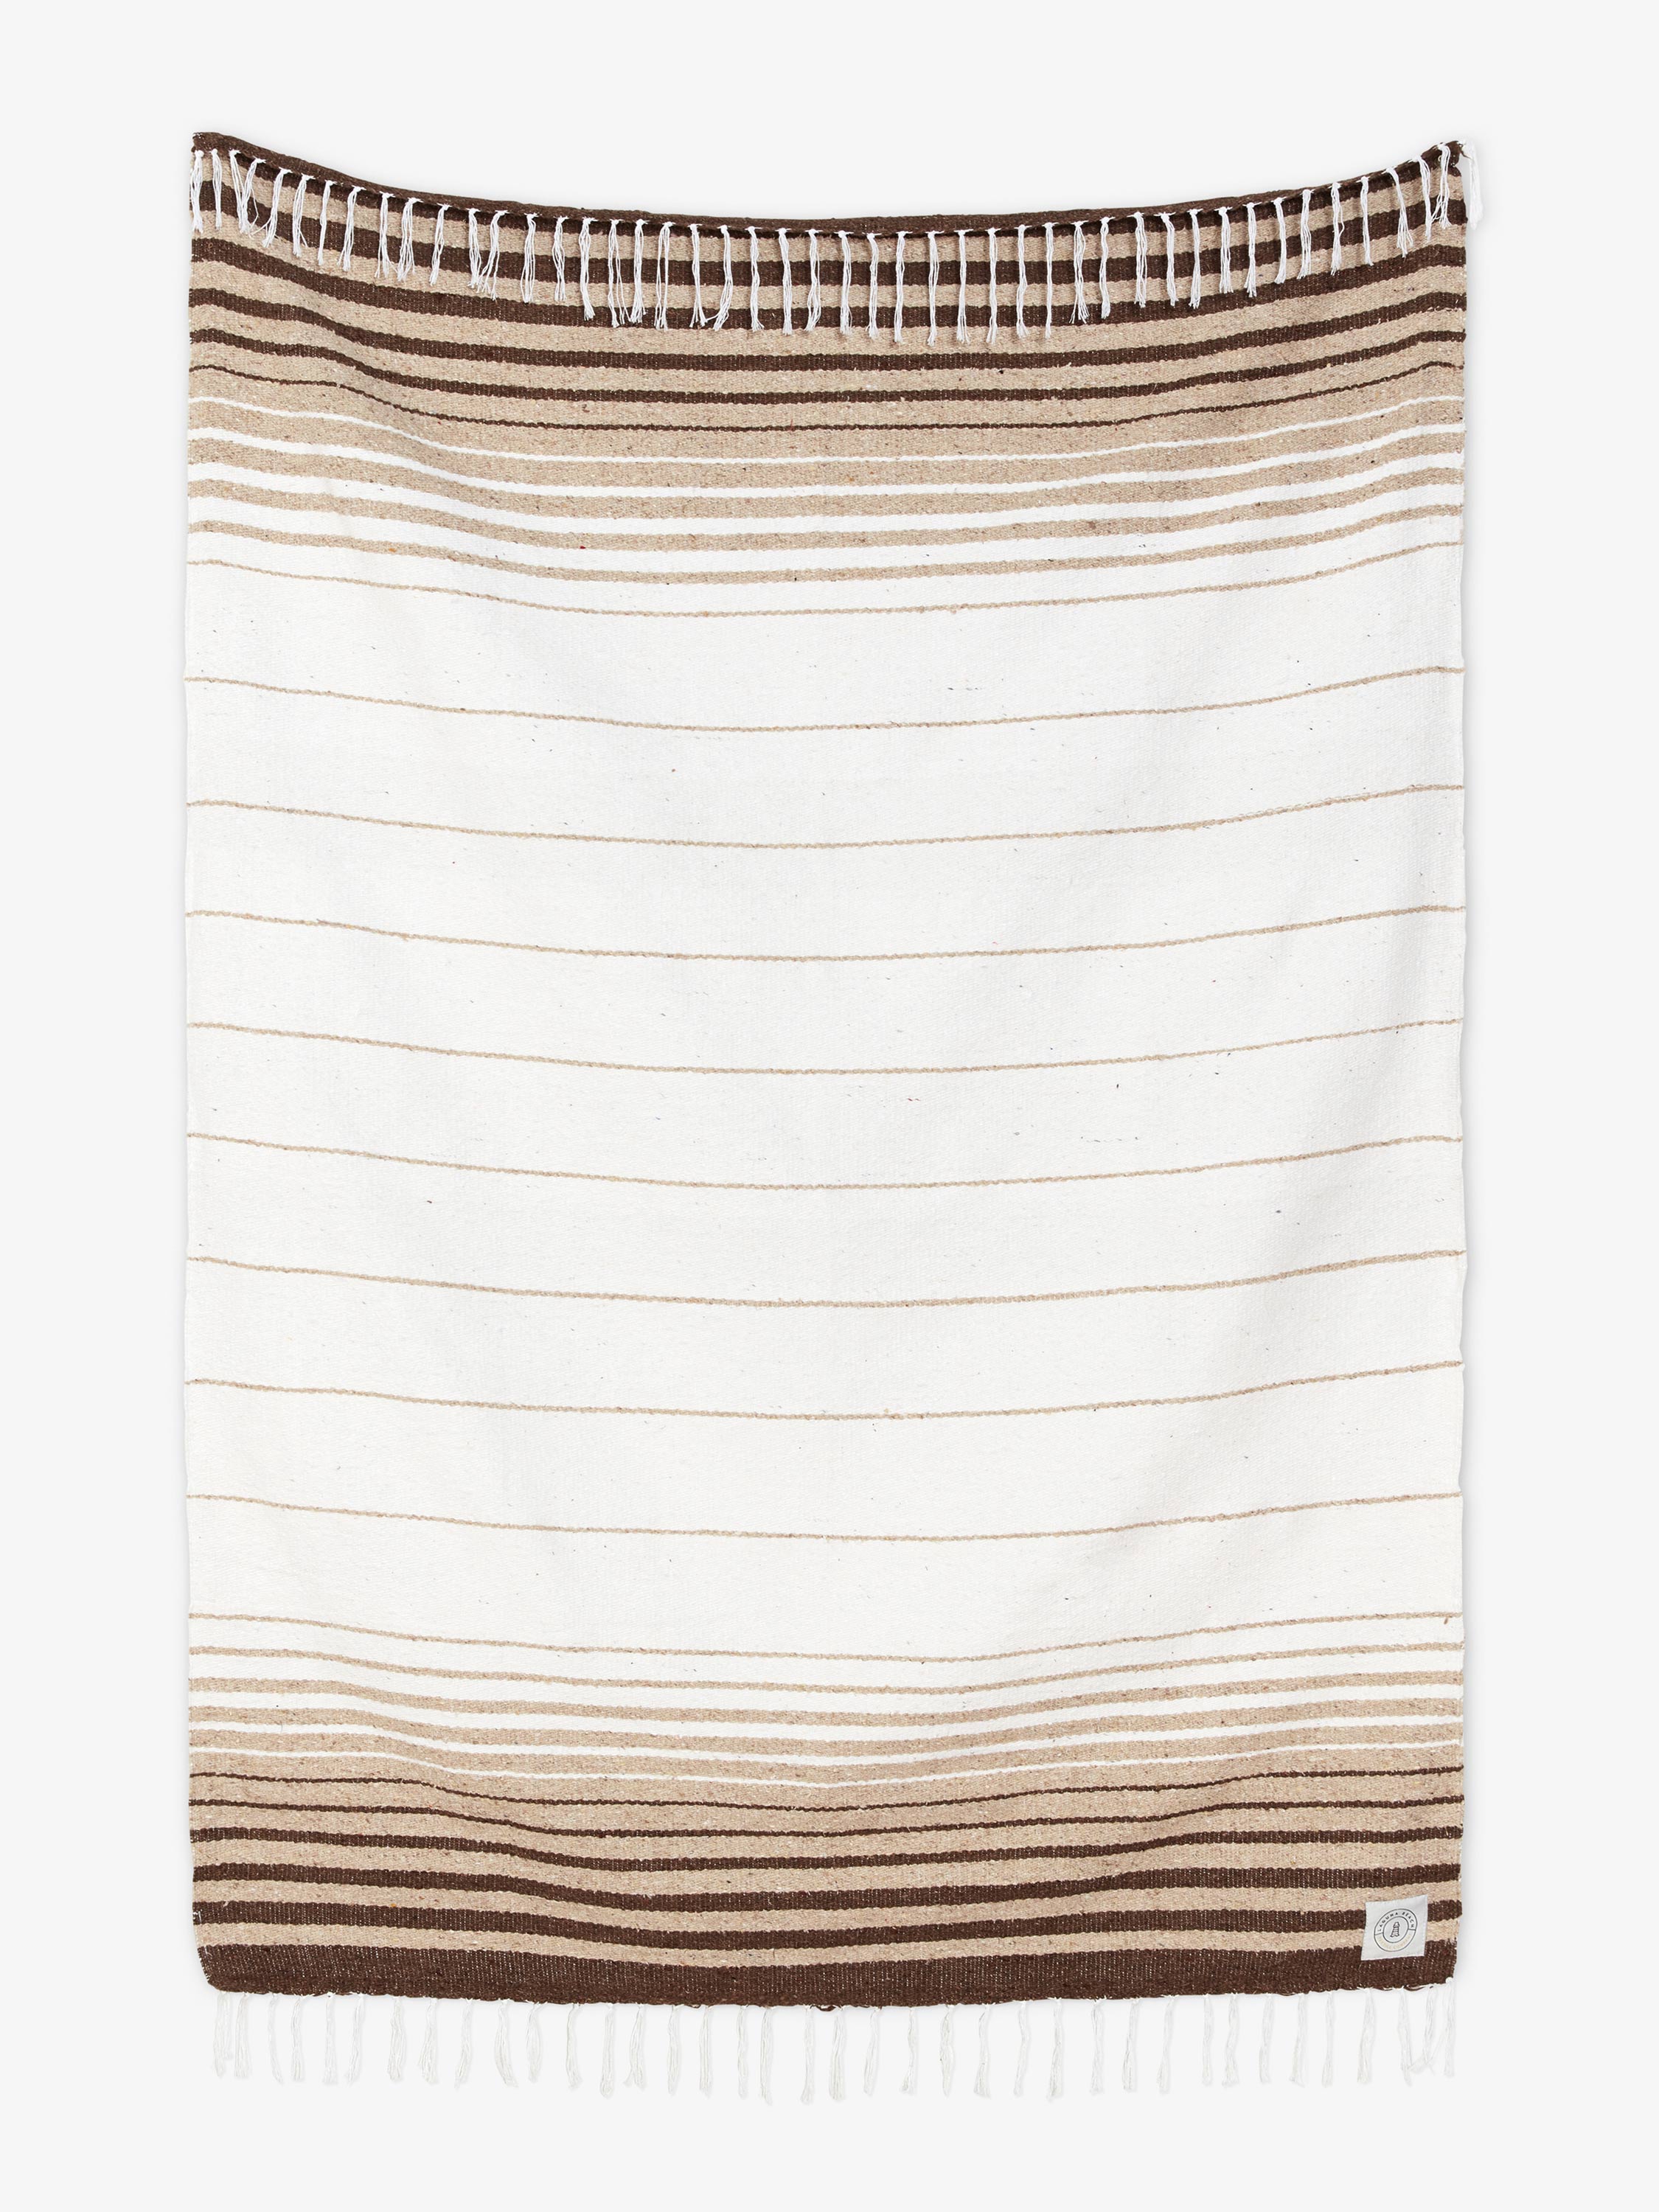 Mocha Tulum Mexican Blanket by Laguna Beach Textile Company